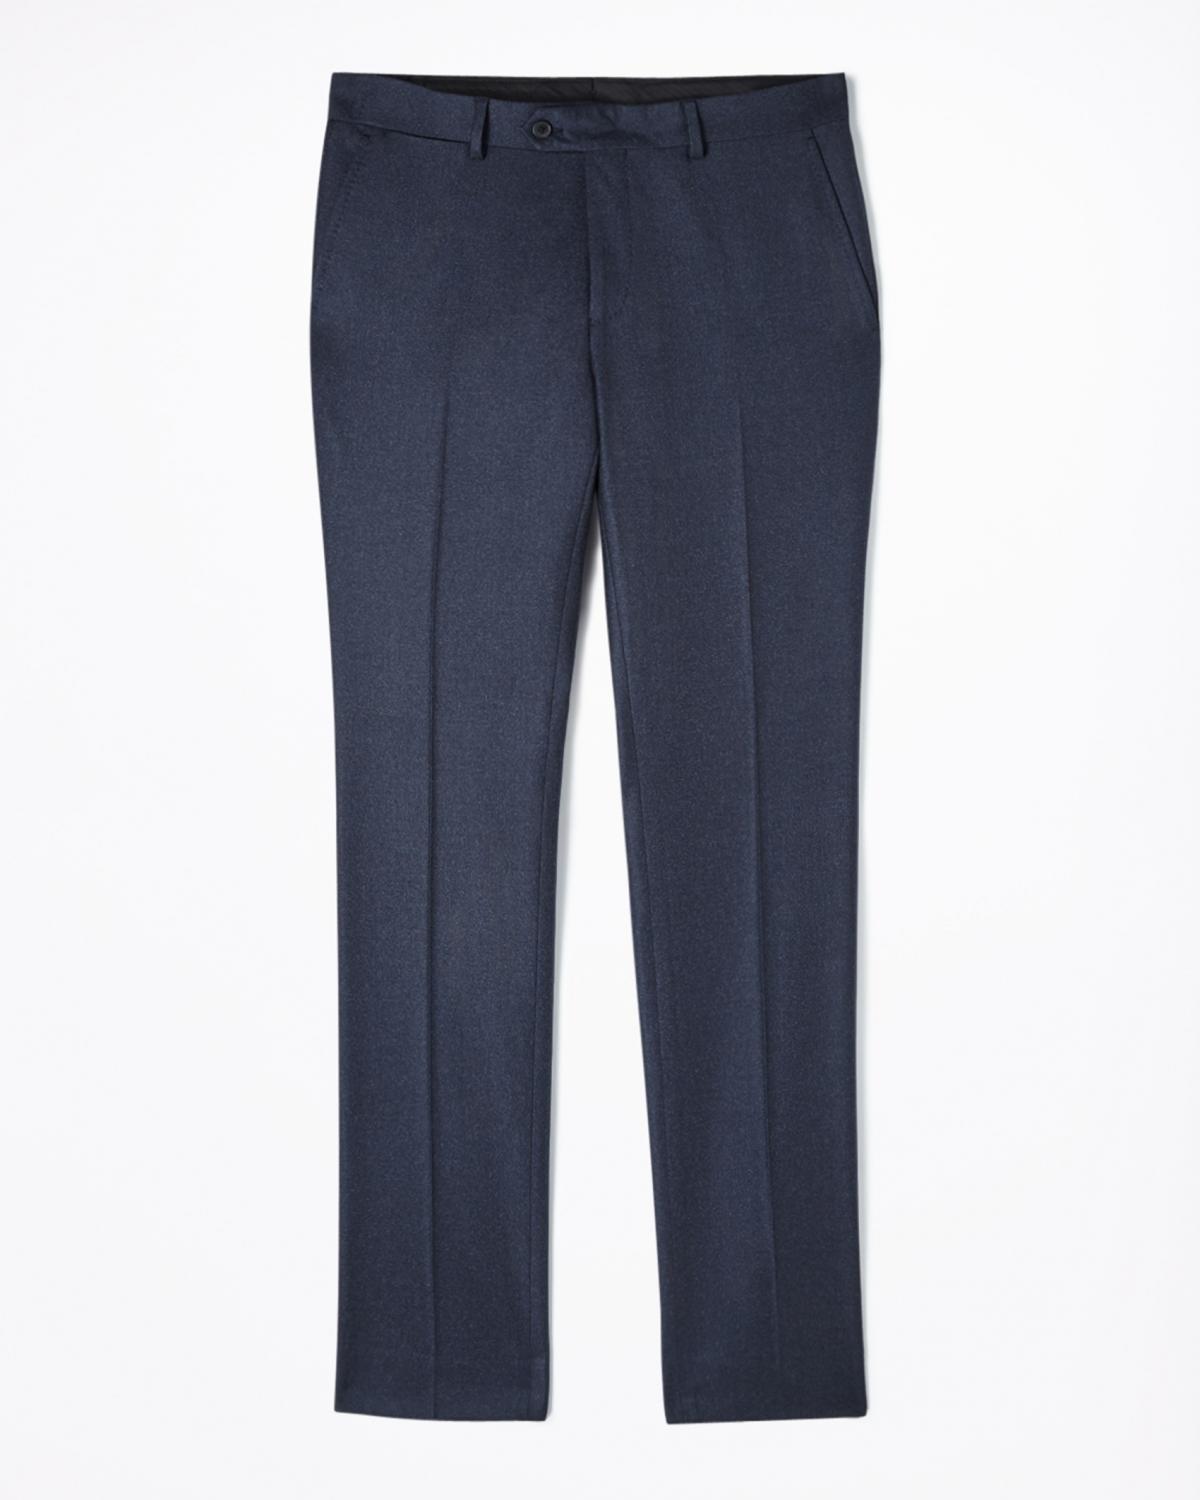 Jigsaw, Bloomsbury Italian Flannel Slim Fit Trousers, £109